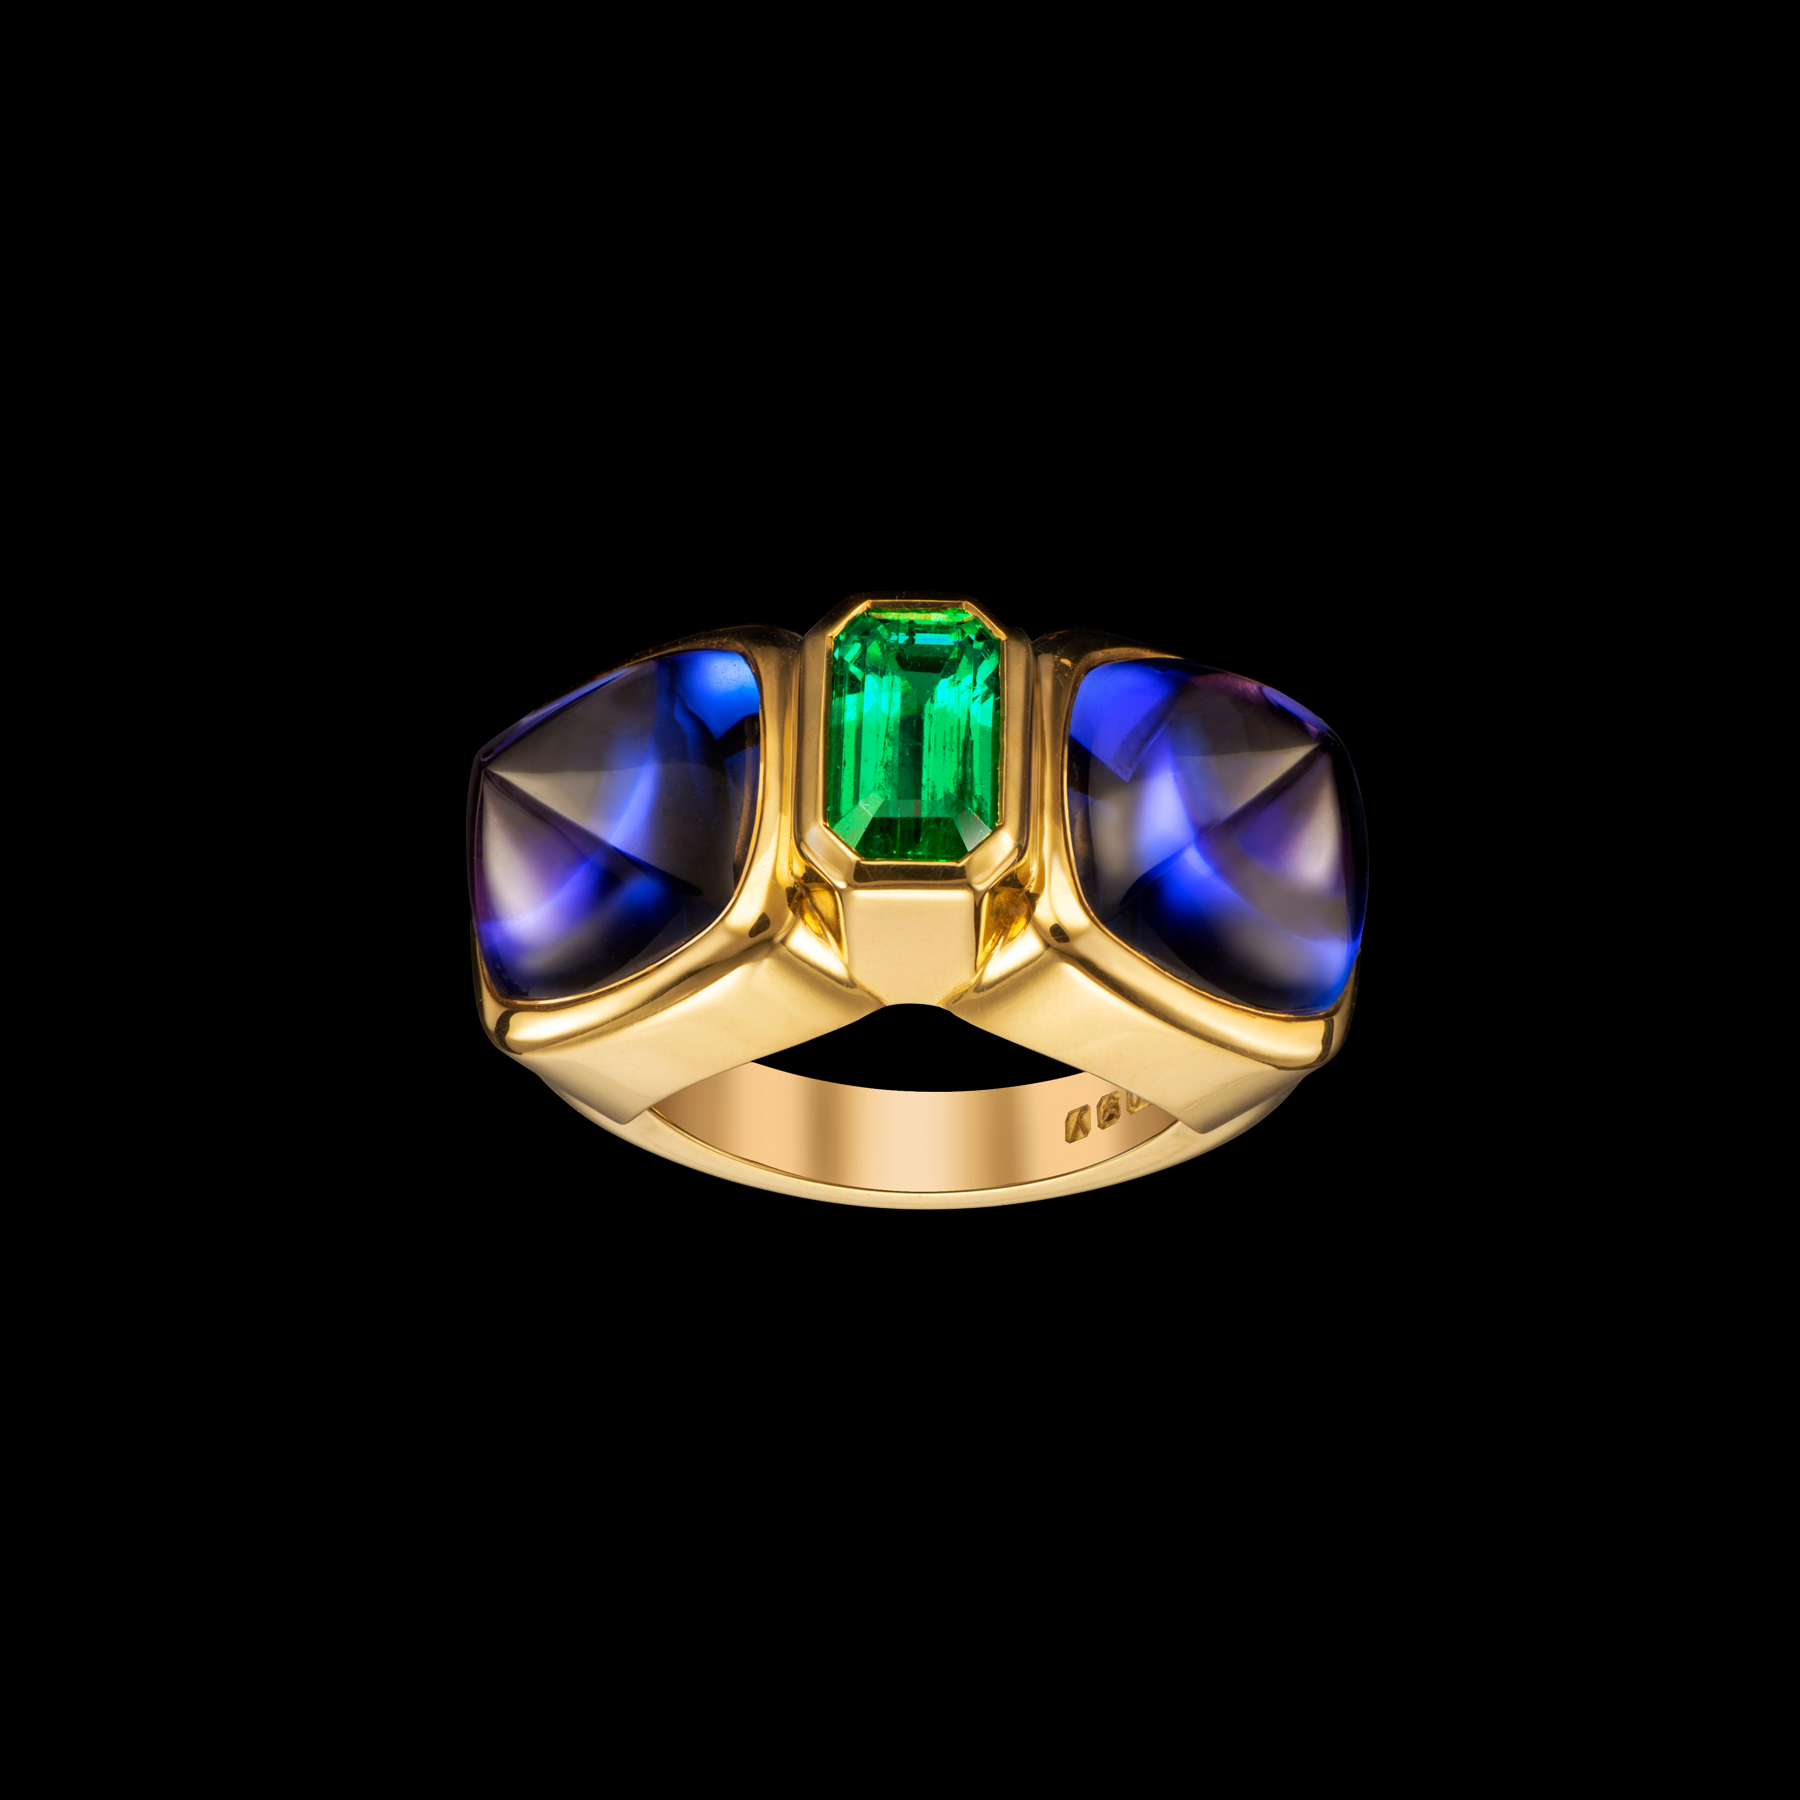 Edible ring by designer Solange Azagury-Partridge - 18 carat Yellow Gold, Tanzanite & Emerald - front view